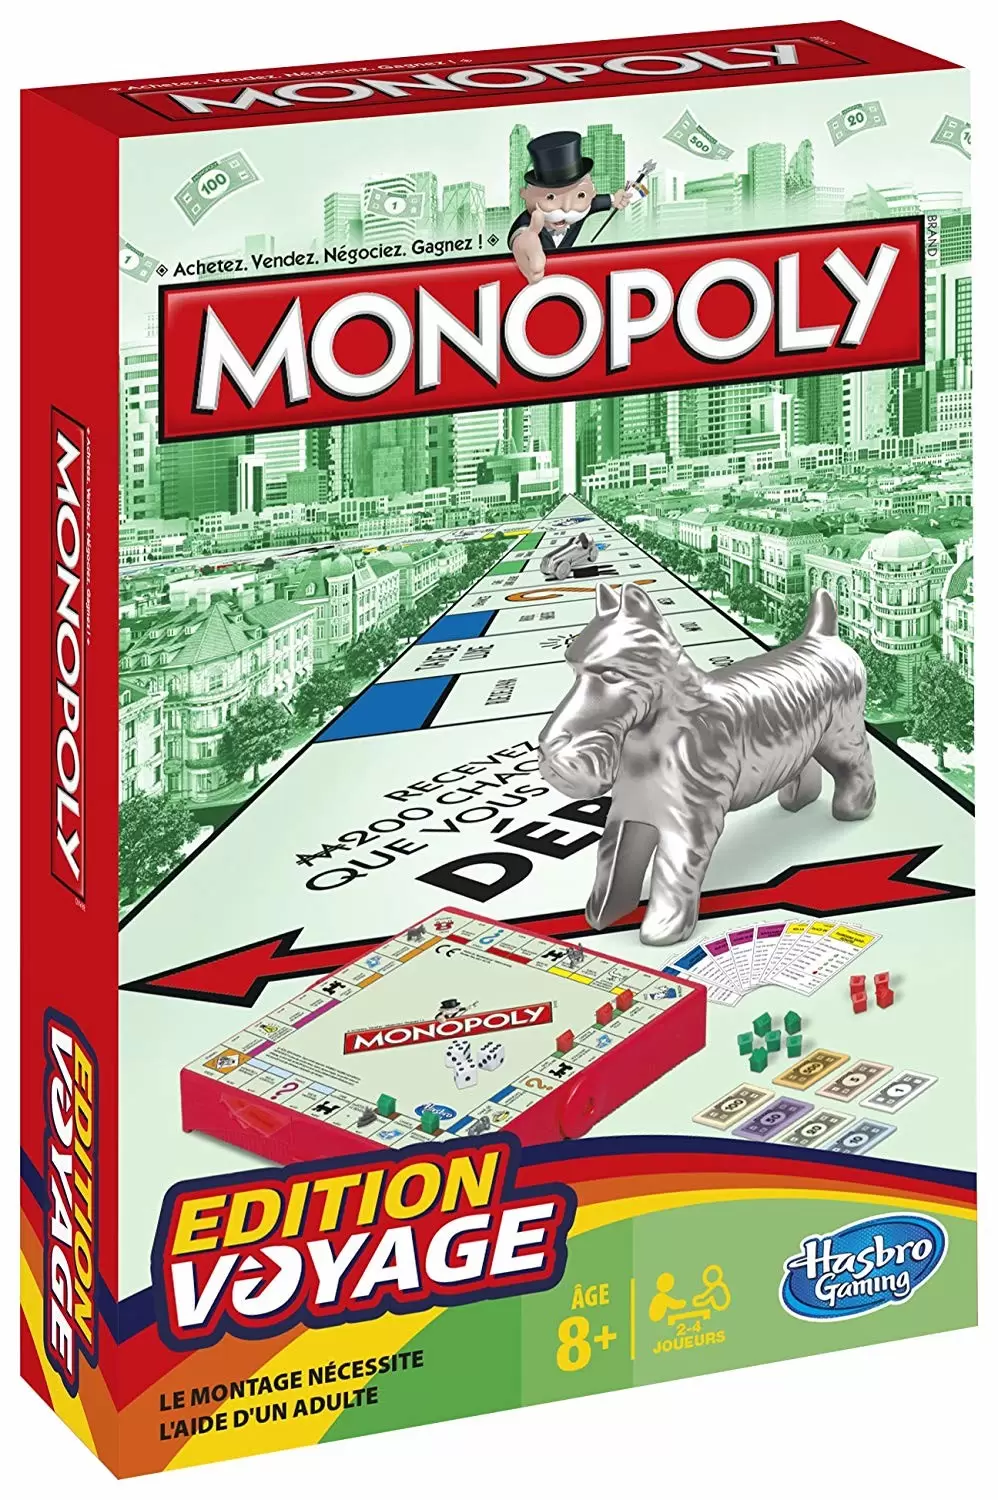 https://thumbs.coleka.com/media/item/201810/15/coleka-hasbro-gaming-monopoly-edition-voyage.webp